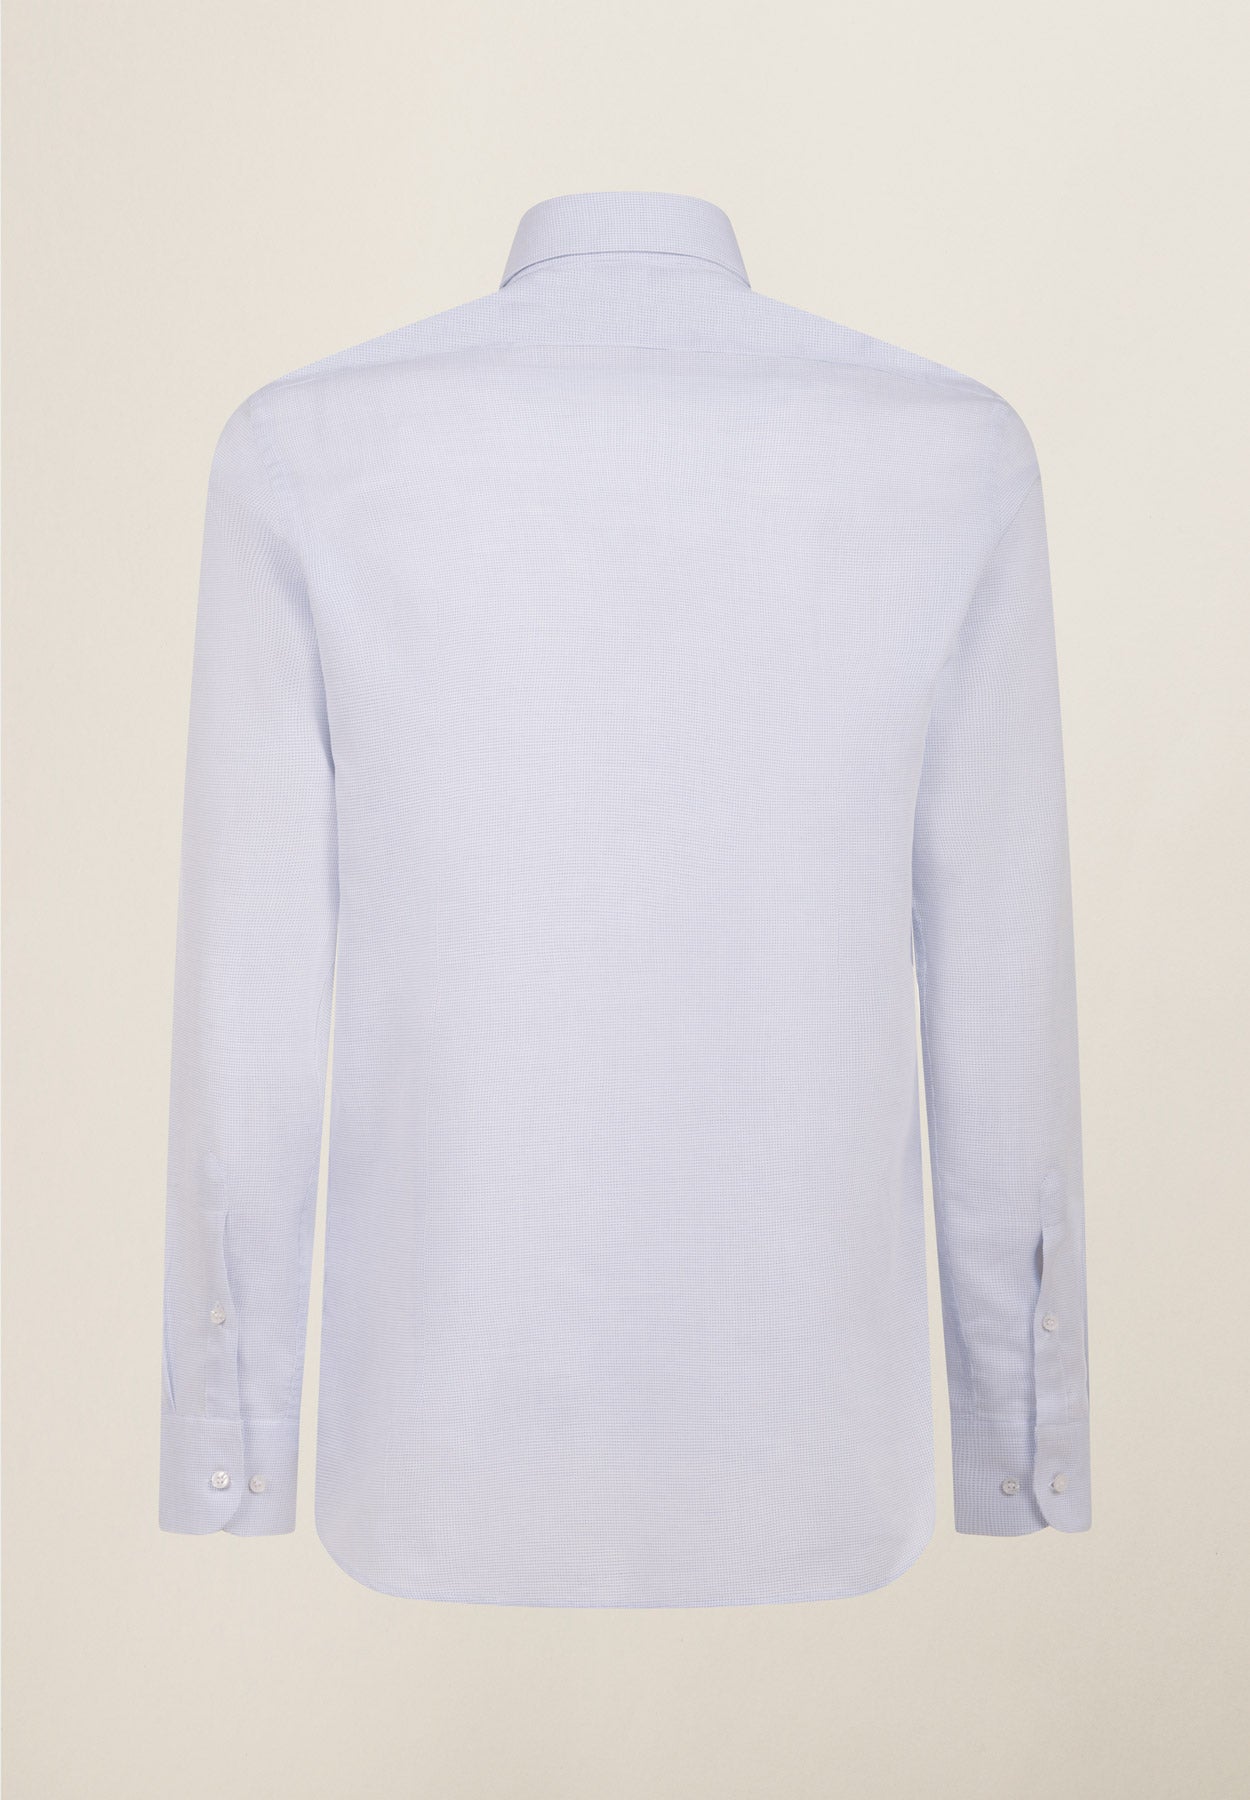 White shirt micro pattern light blue cotton slim fit